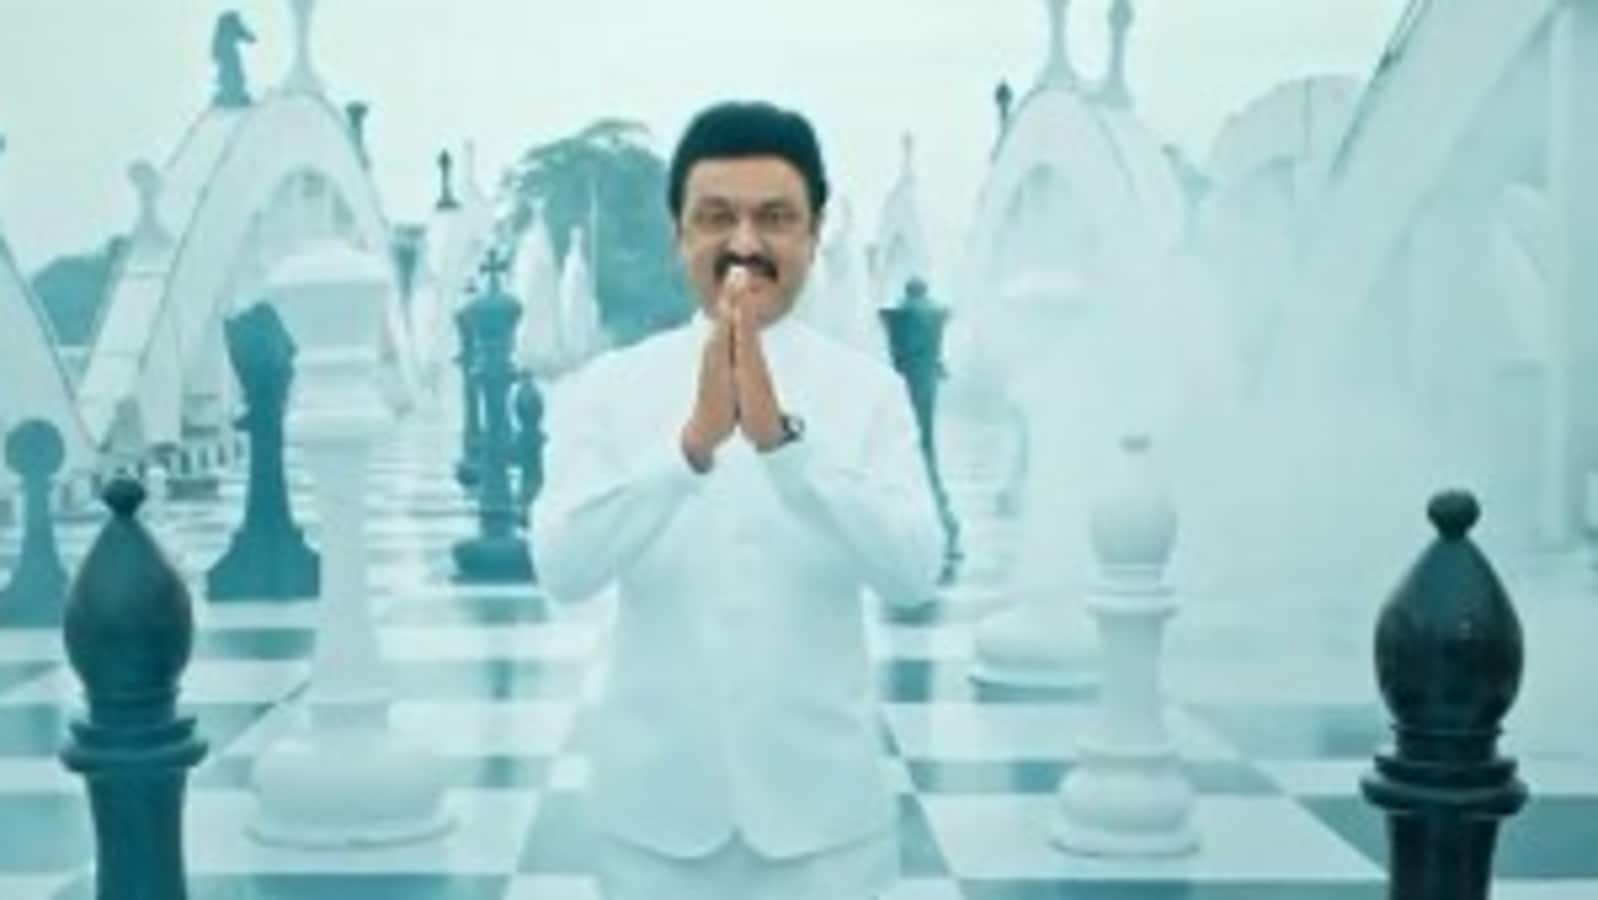 Tamil Nadu CM launches logo, mascot of 44th Chess Olympiad